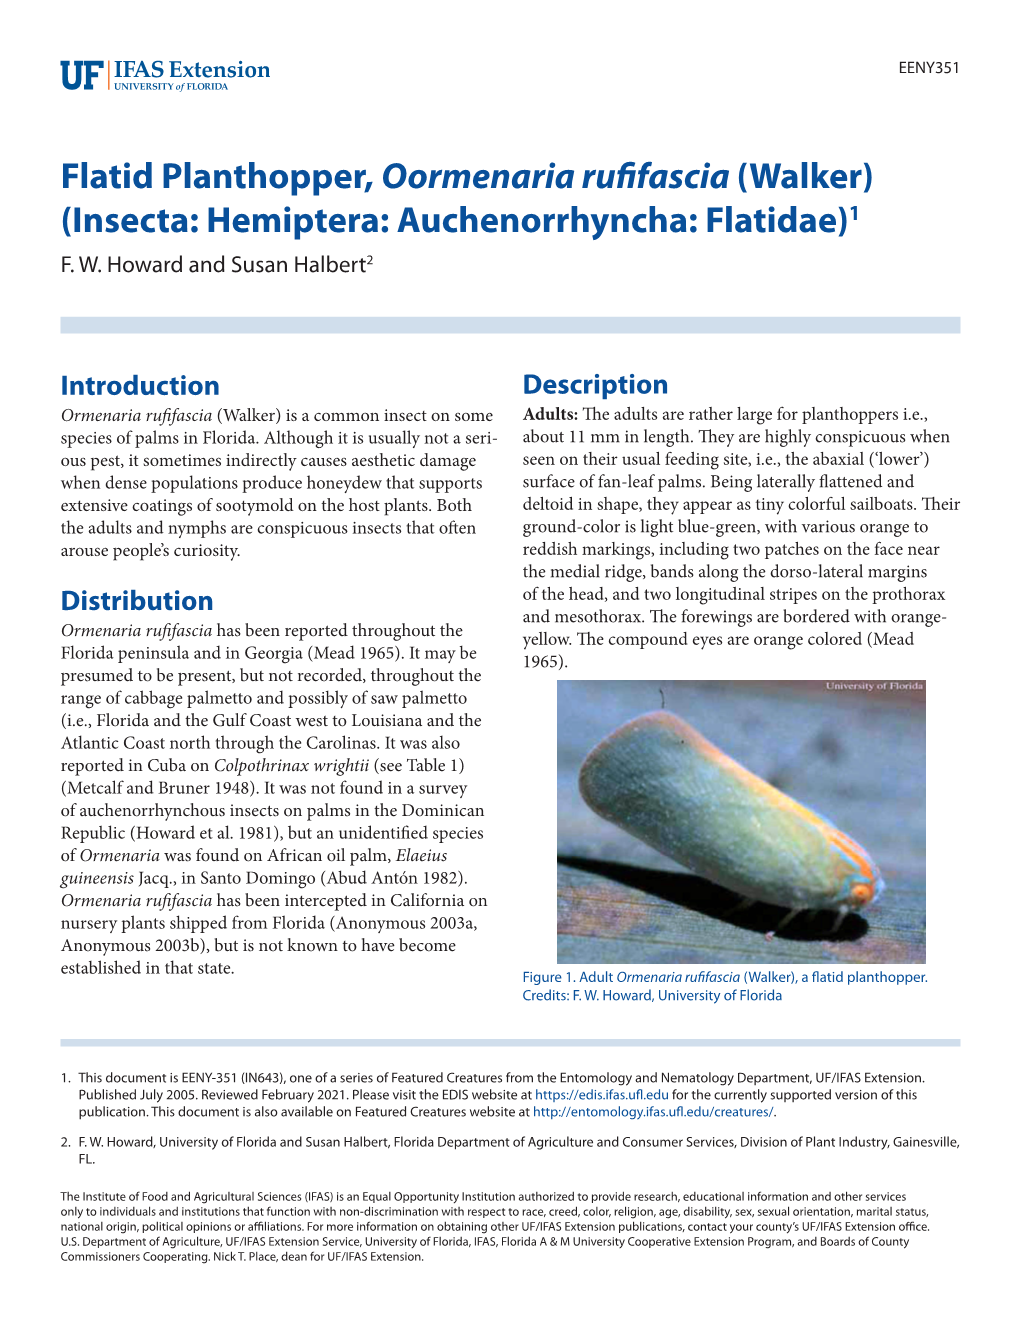 Flatid Planthopper, Oormenaria Rufifascia (Walker) (Insecta: Hemiptera: Auchenorrhyncha: Flatidae)1 F